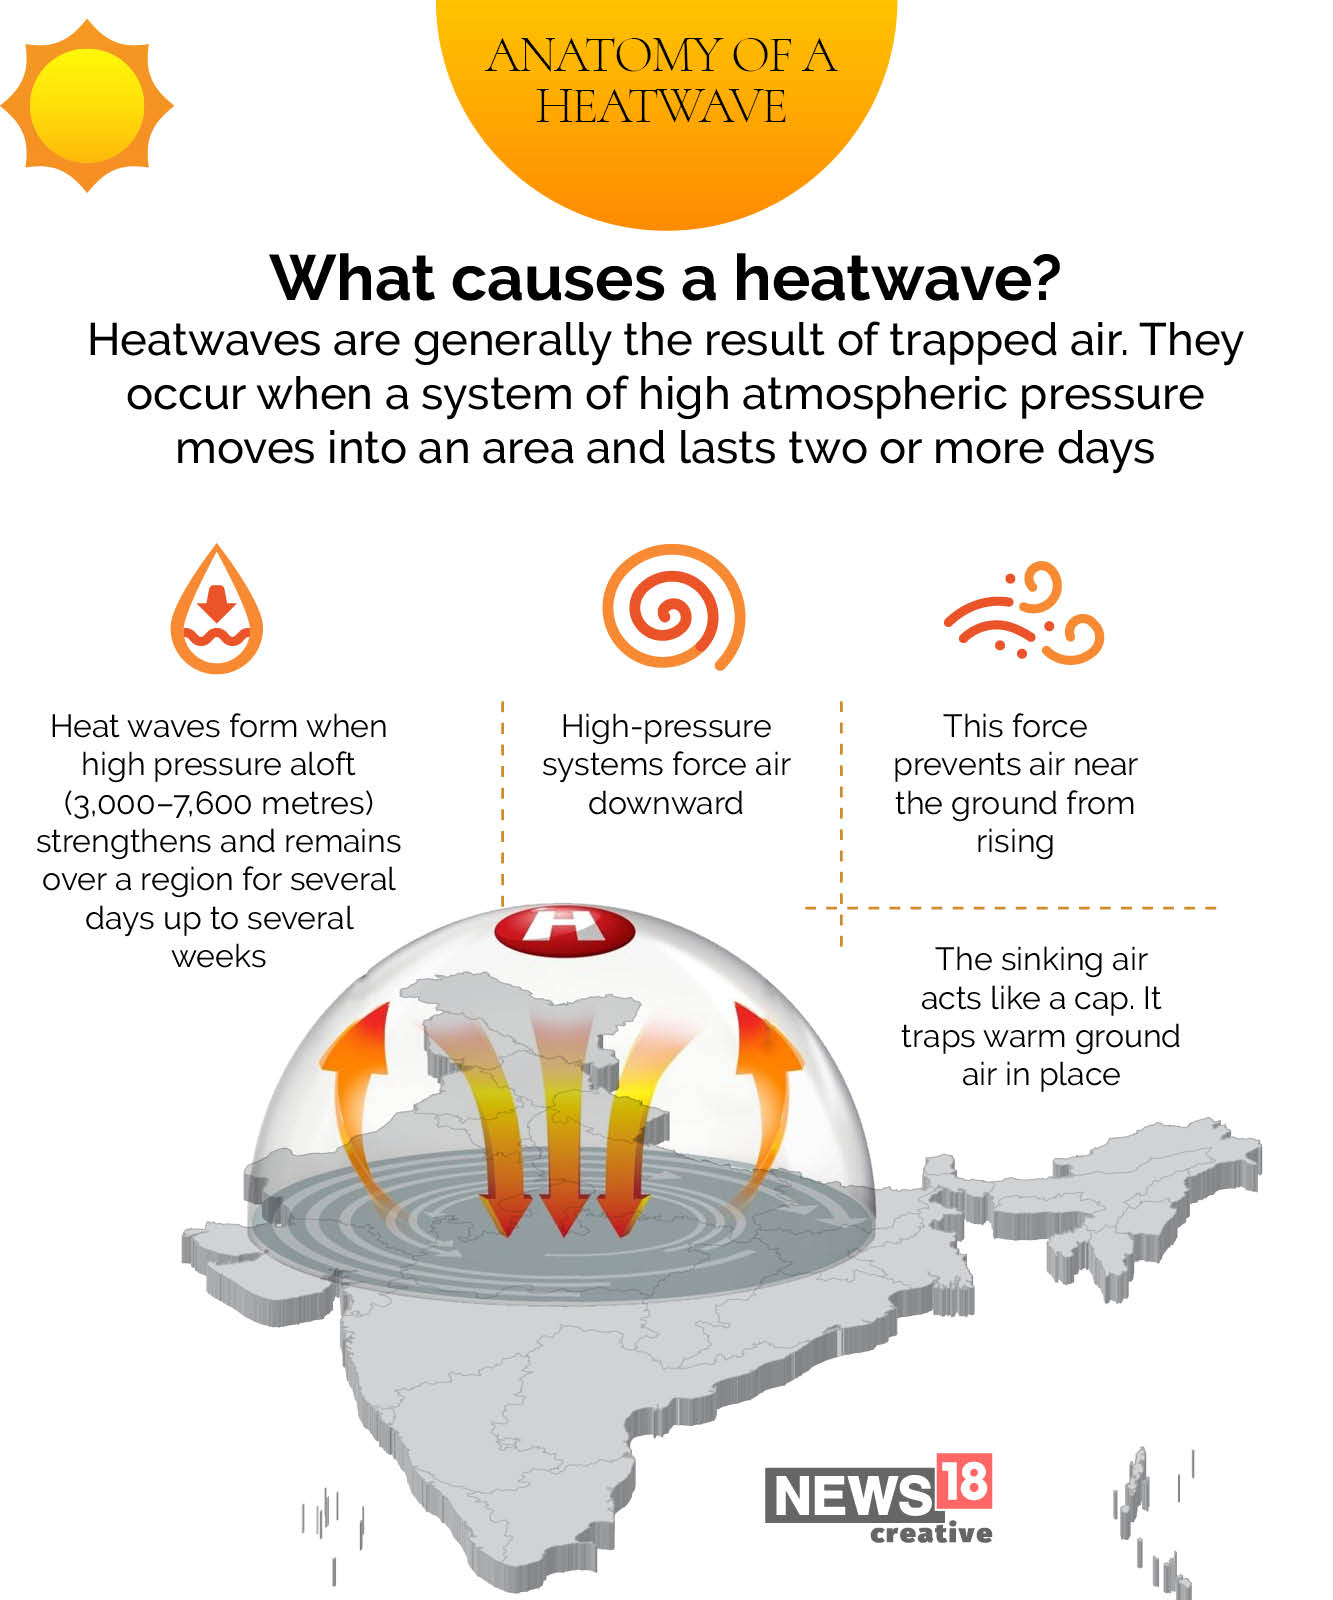 The anatomy of a heatwave